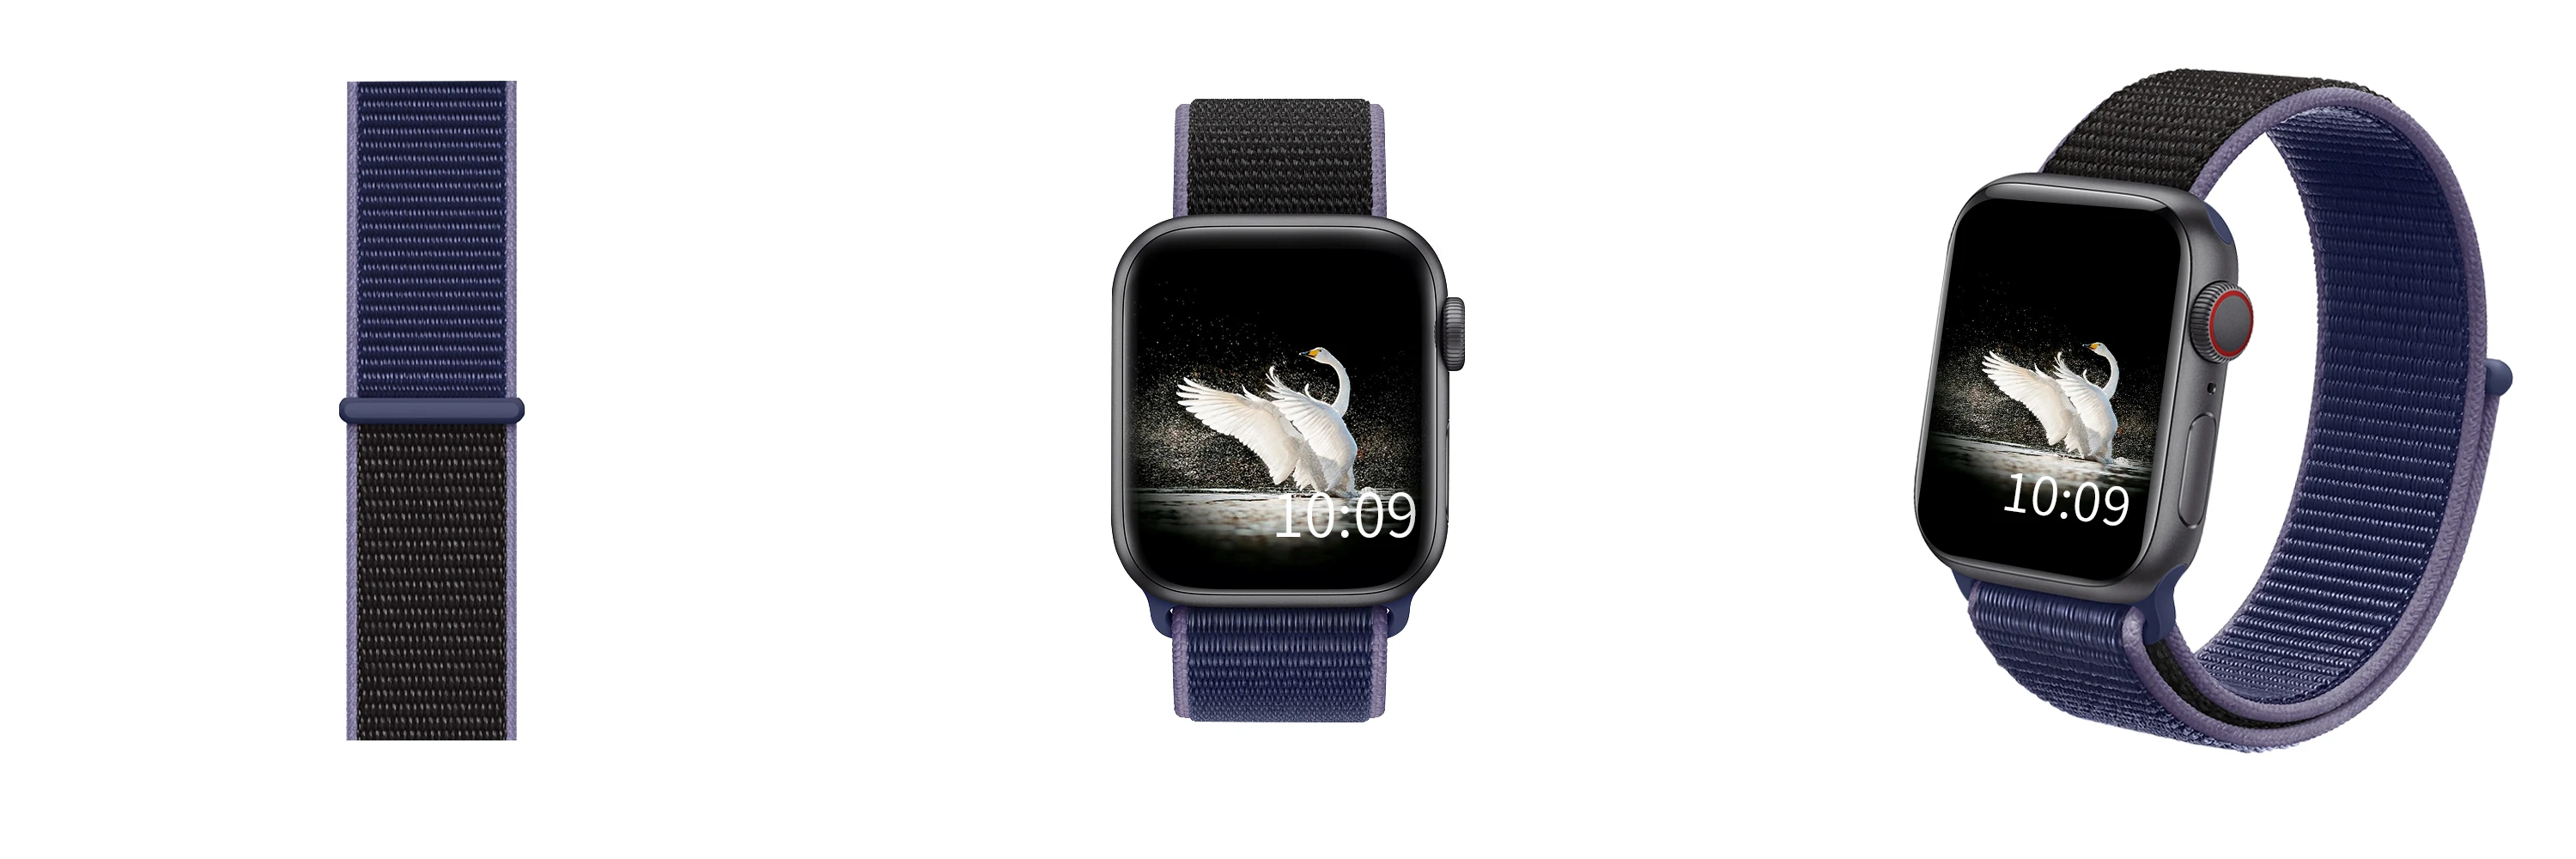 DIMU ремешок для наручных часов Apple Watch Series 5/4/3/2 38 мм 42 мм нейлон из мягкой дышащей ткани сменный ремешок для наручных часов iWatch, версия спортивный ремешок для часов 42 мм 44 мм